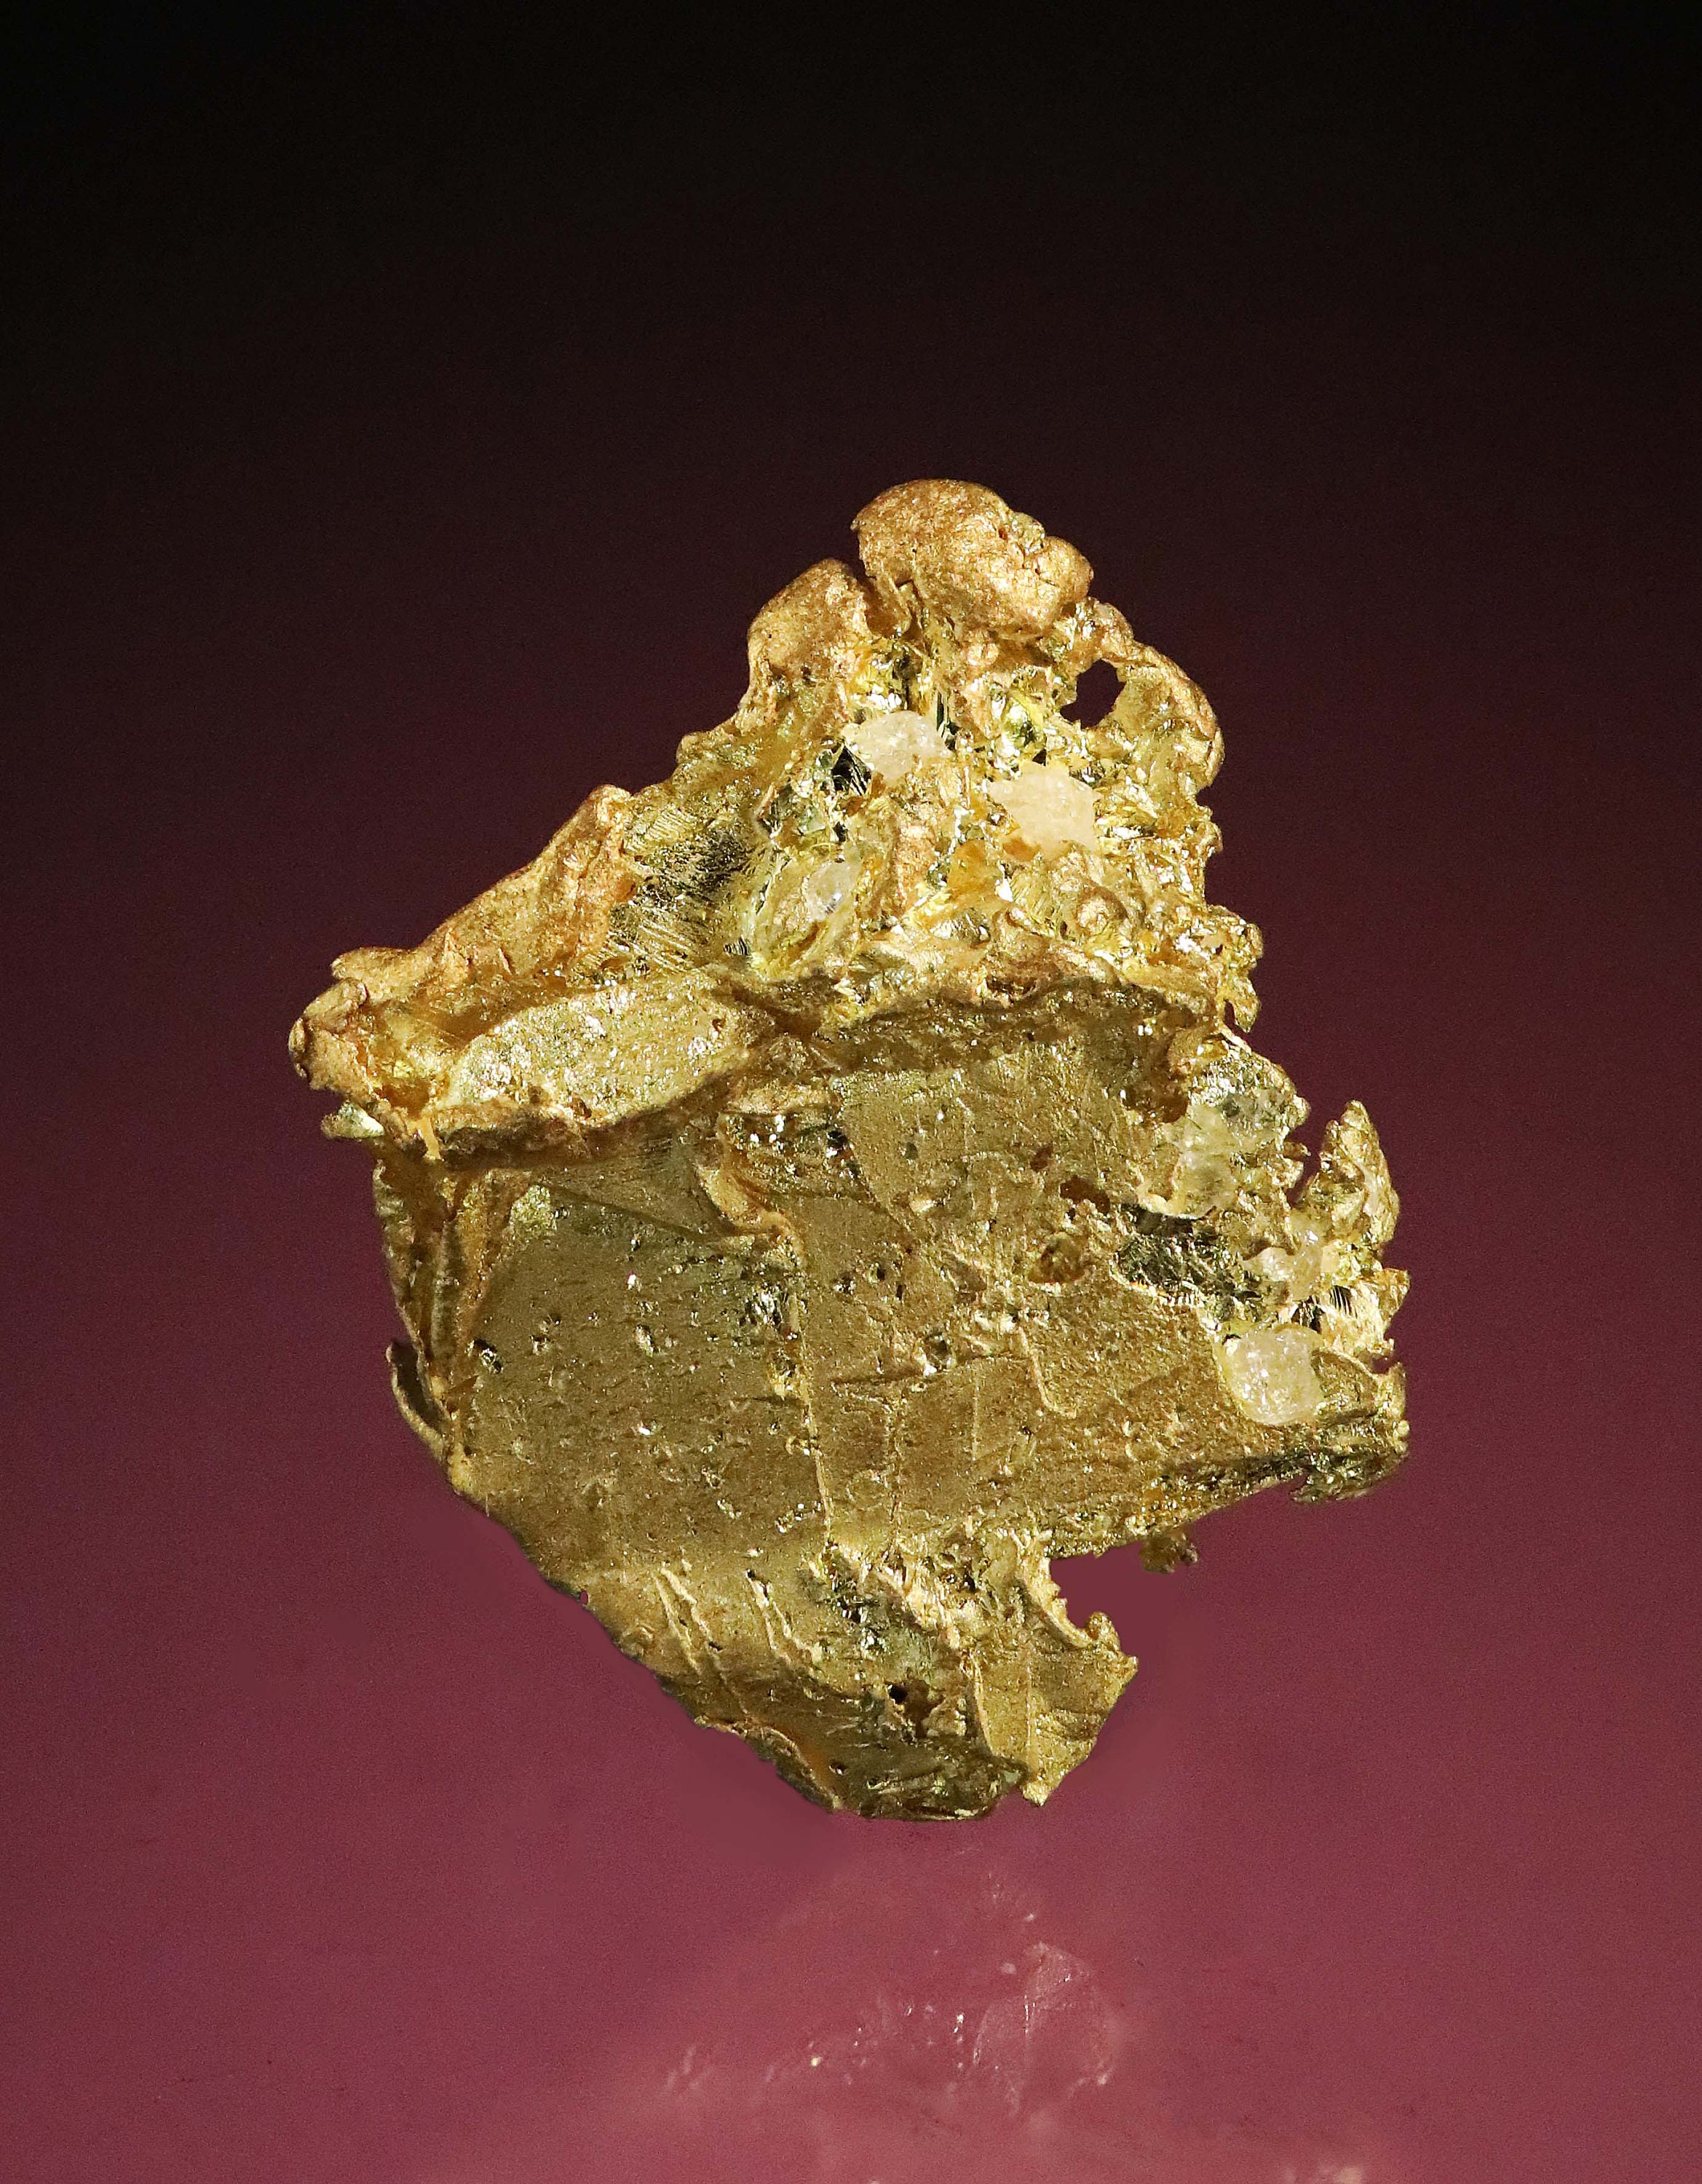 Triangle Shaped California Natural Gold Nugget - 2.93 grams [RB240] -  $250.00 : GoldNuggetSales